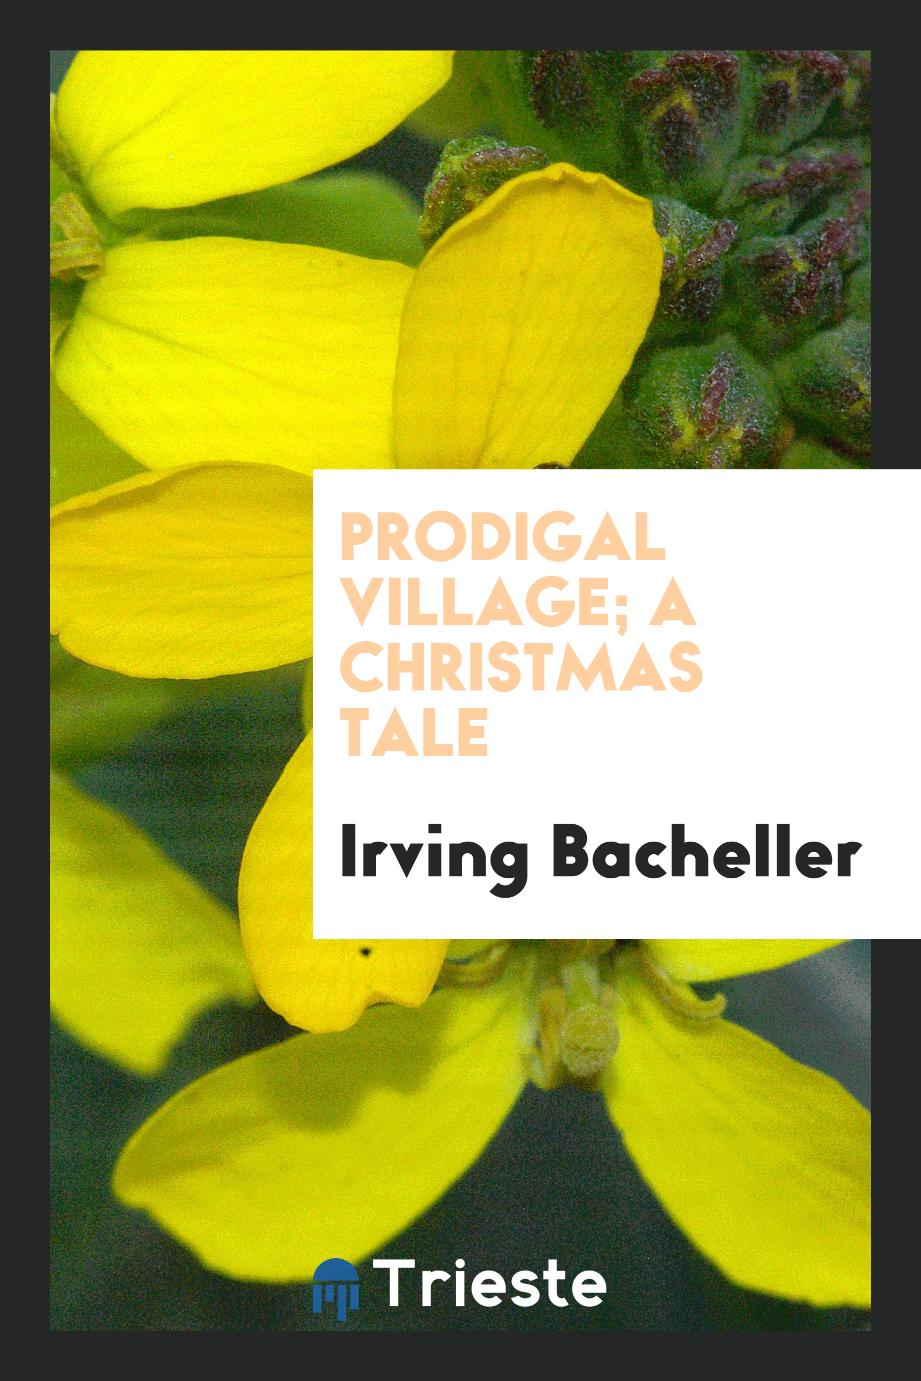 Prodigal village; a Christmas tale